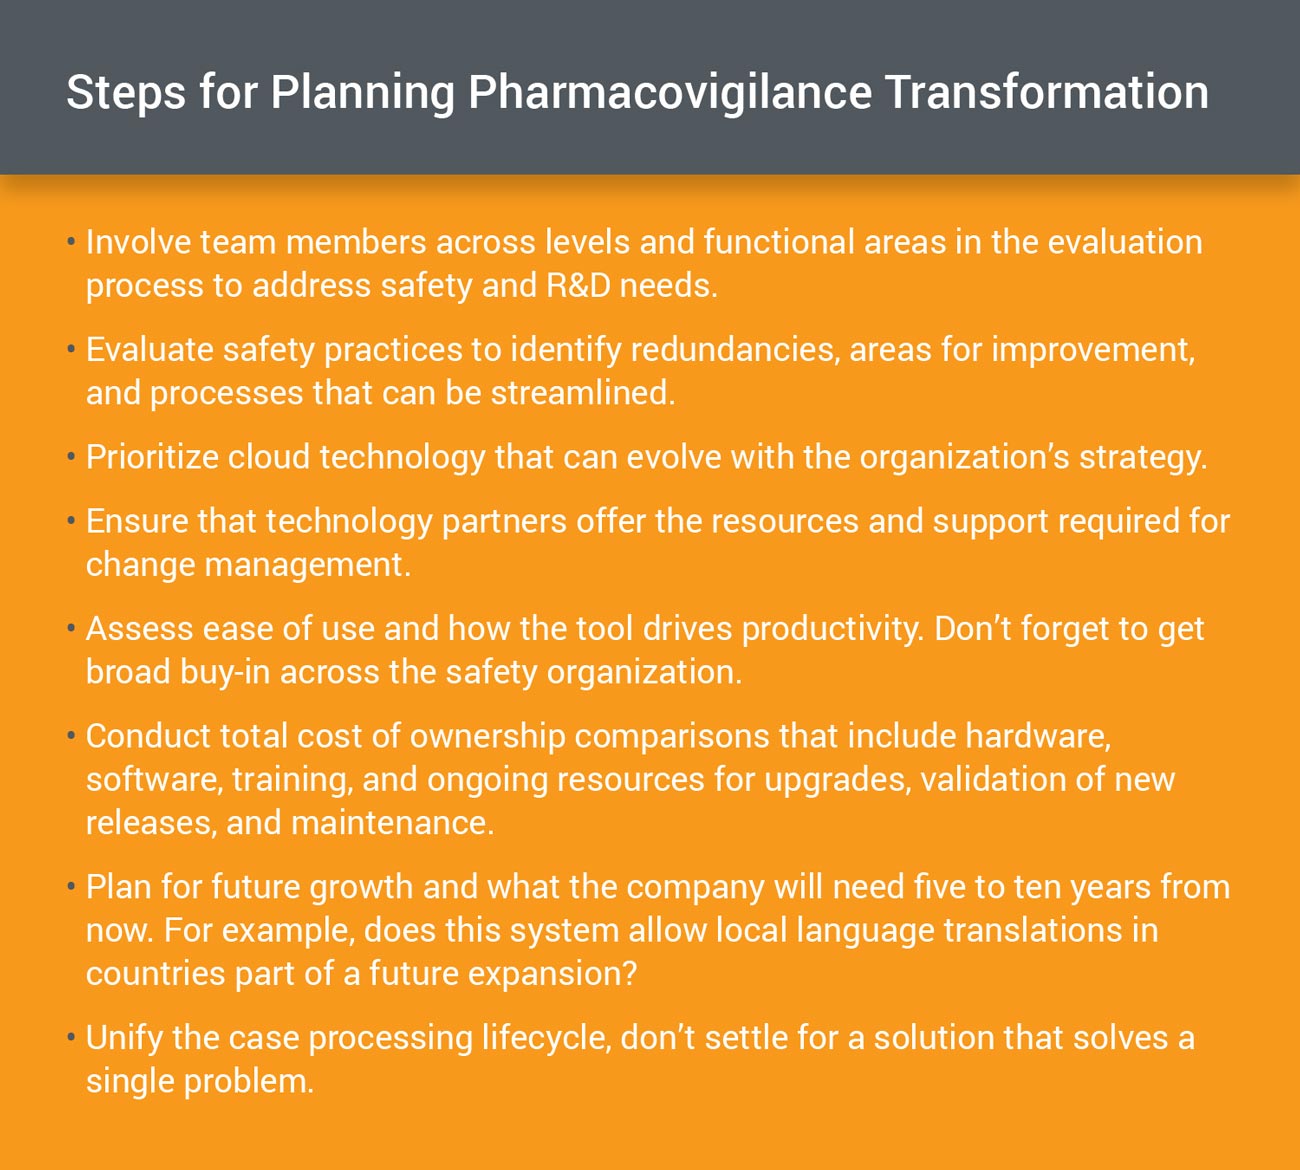 Steps for Planning Pharmacovigilance Transformation